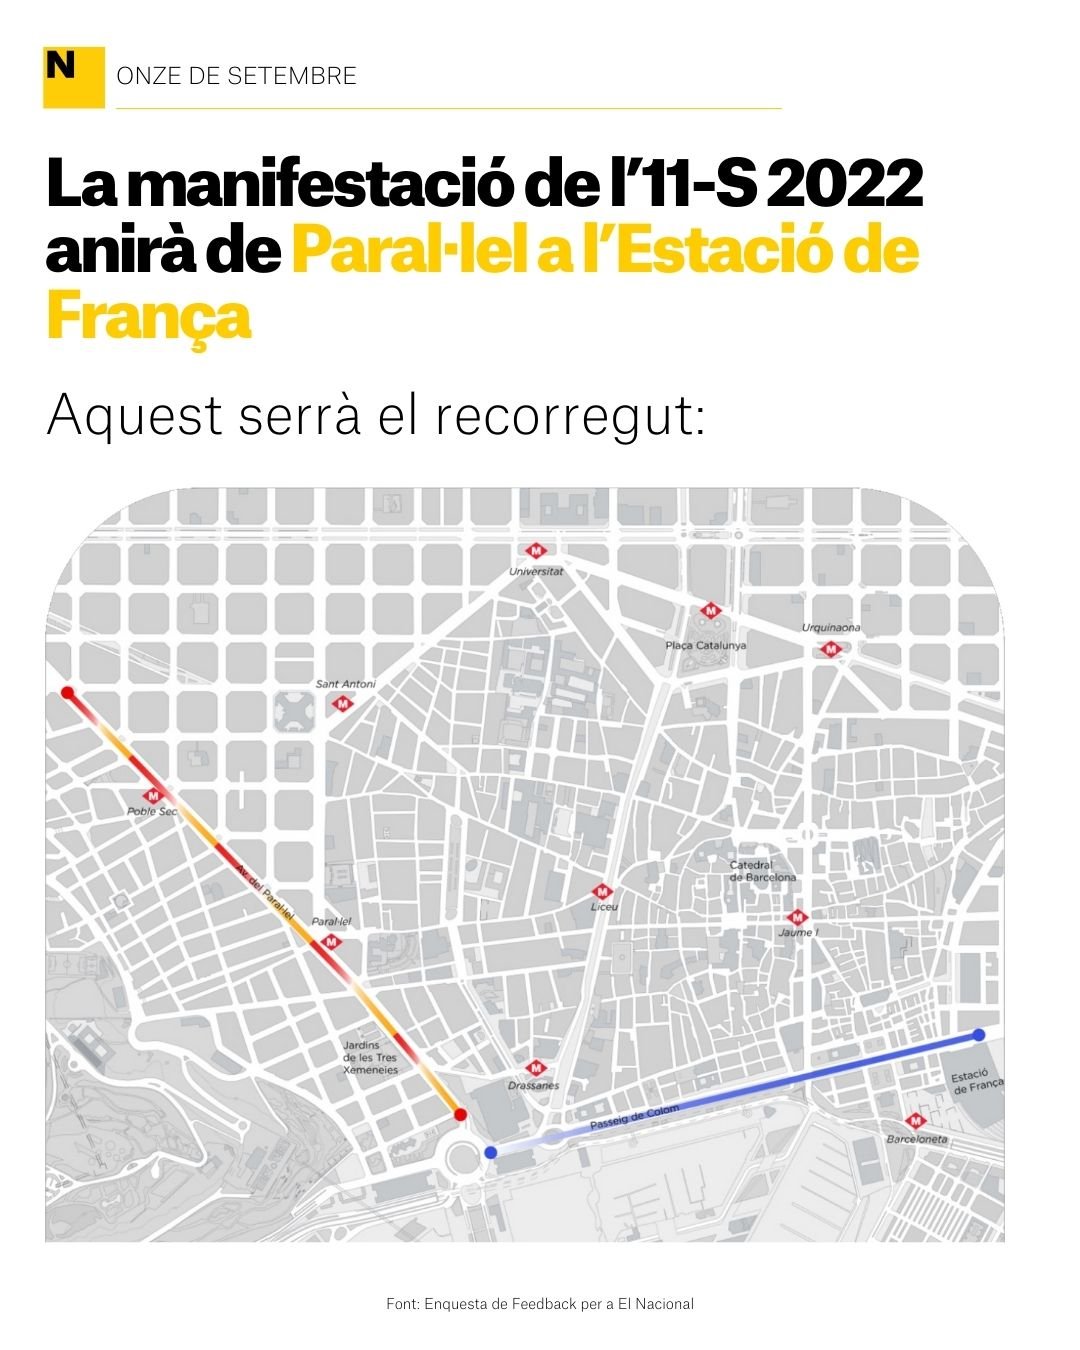 mapa manifestacio anc festividad 2022 11 septiembre barcelona